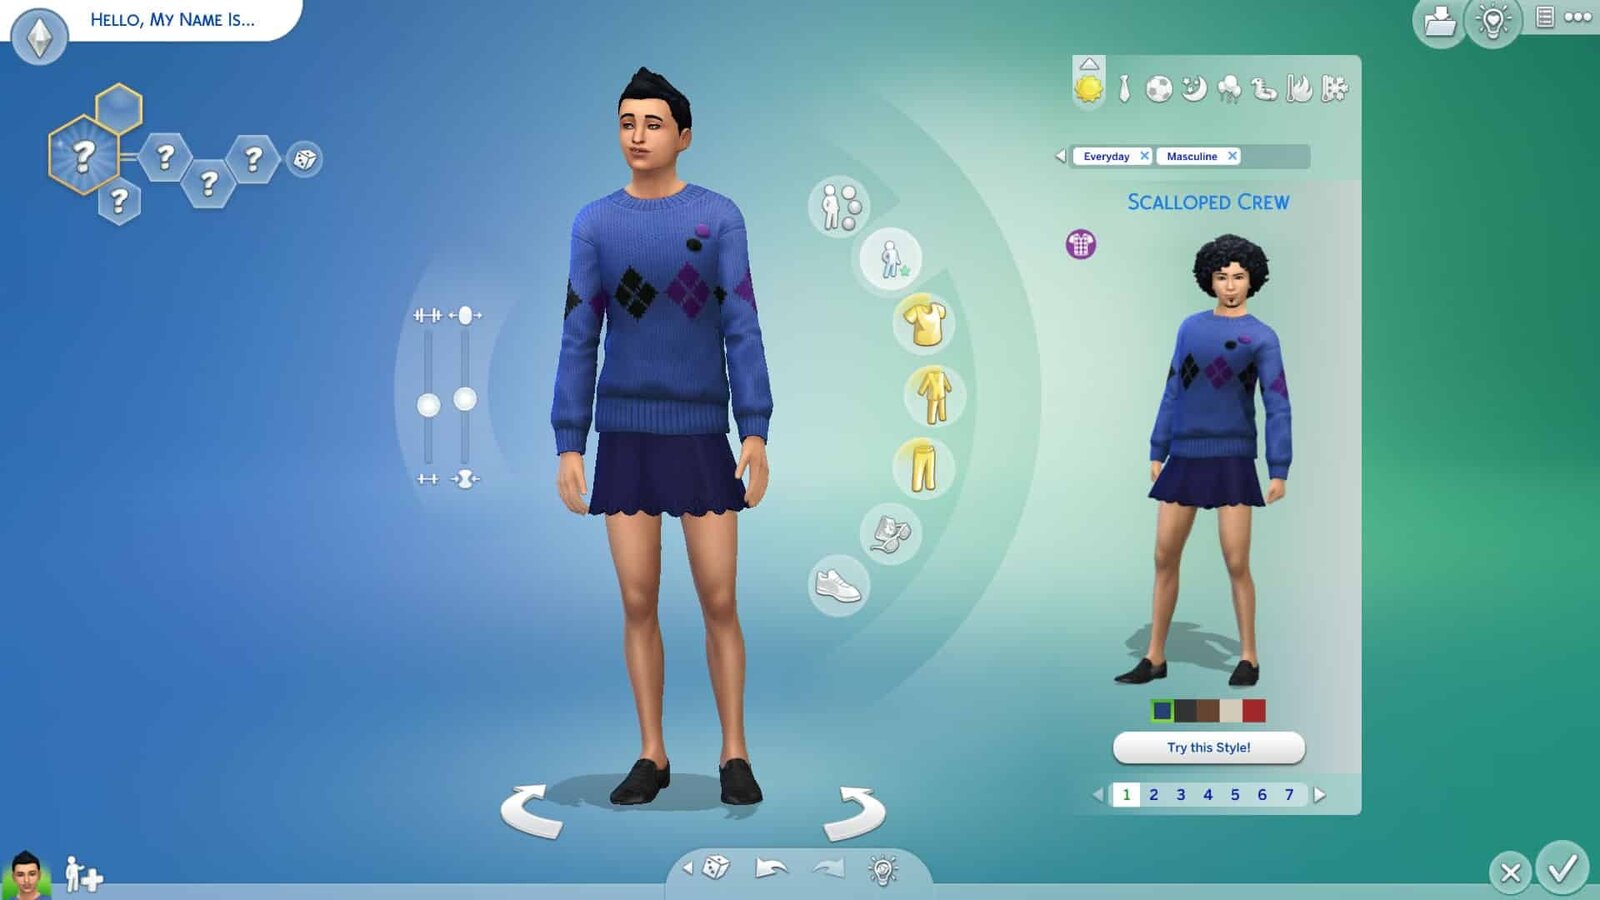 The Sims 4 - Modern Menswear Kit